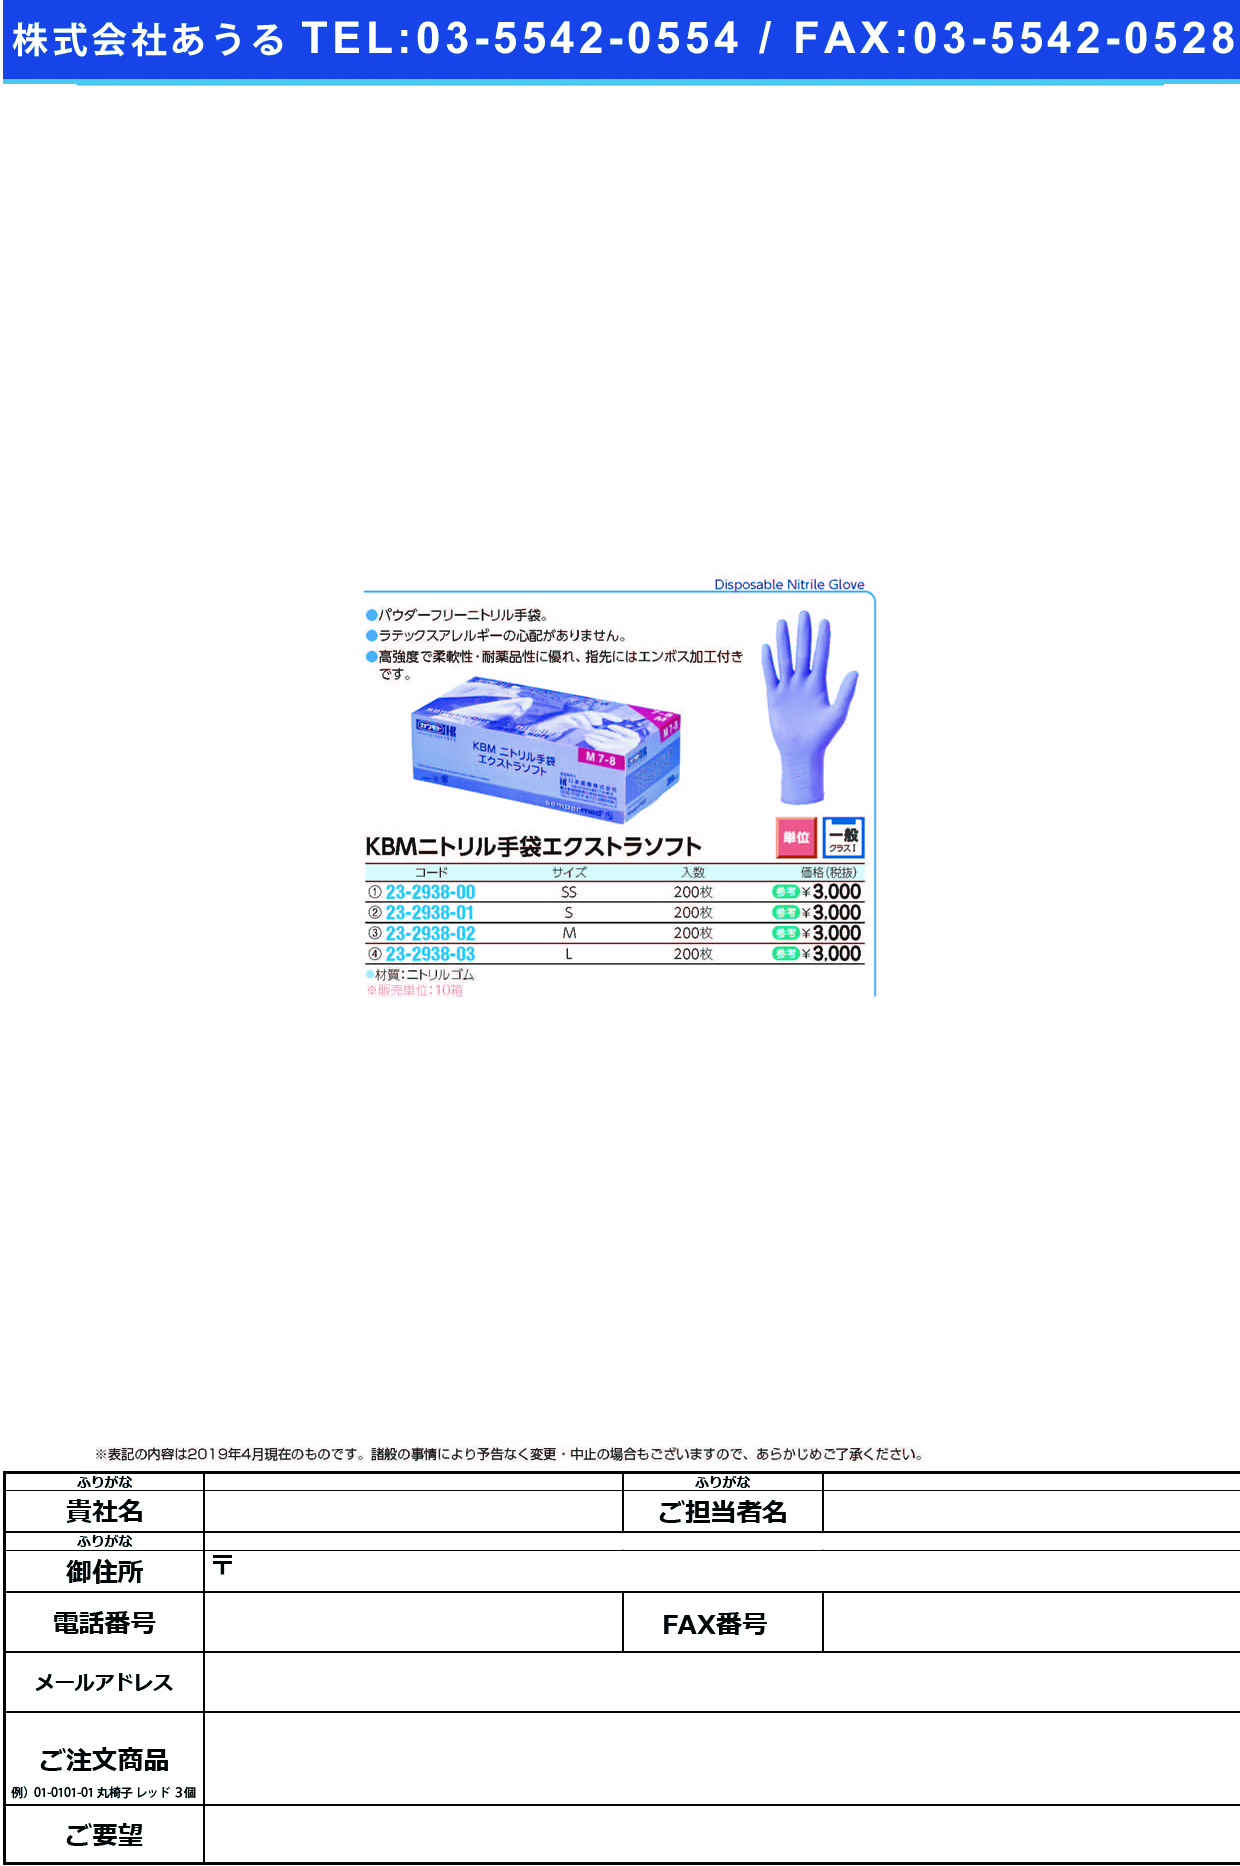 (23-2938-00)ＫＢＭニトリル手袋エクストラソフト SS(200ﾏｲｲﾘ) KBMﾆﾄﾘﾙﾃﾌﾞｸﾛｴｸｽﾄﾗｿﾌﾄ(川本産業)【10箱単位】【2019年カタログ商品】